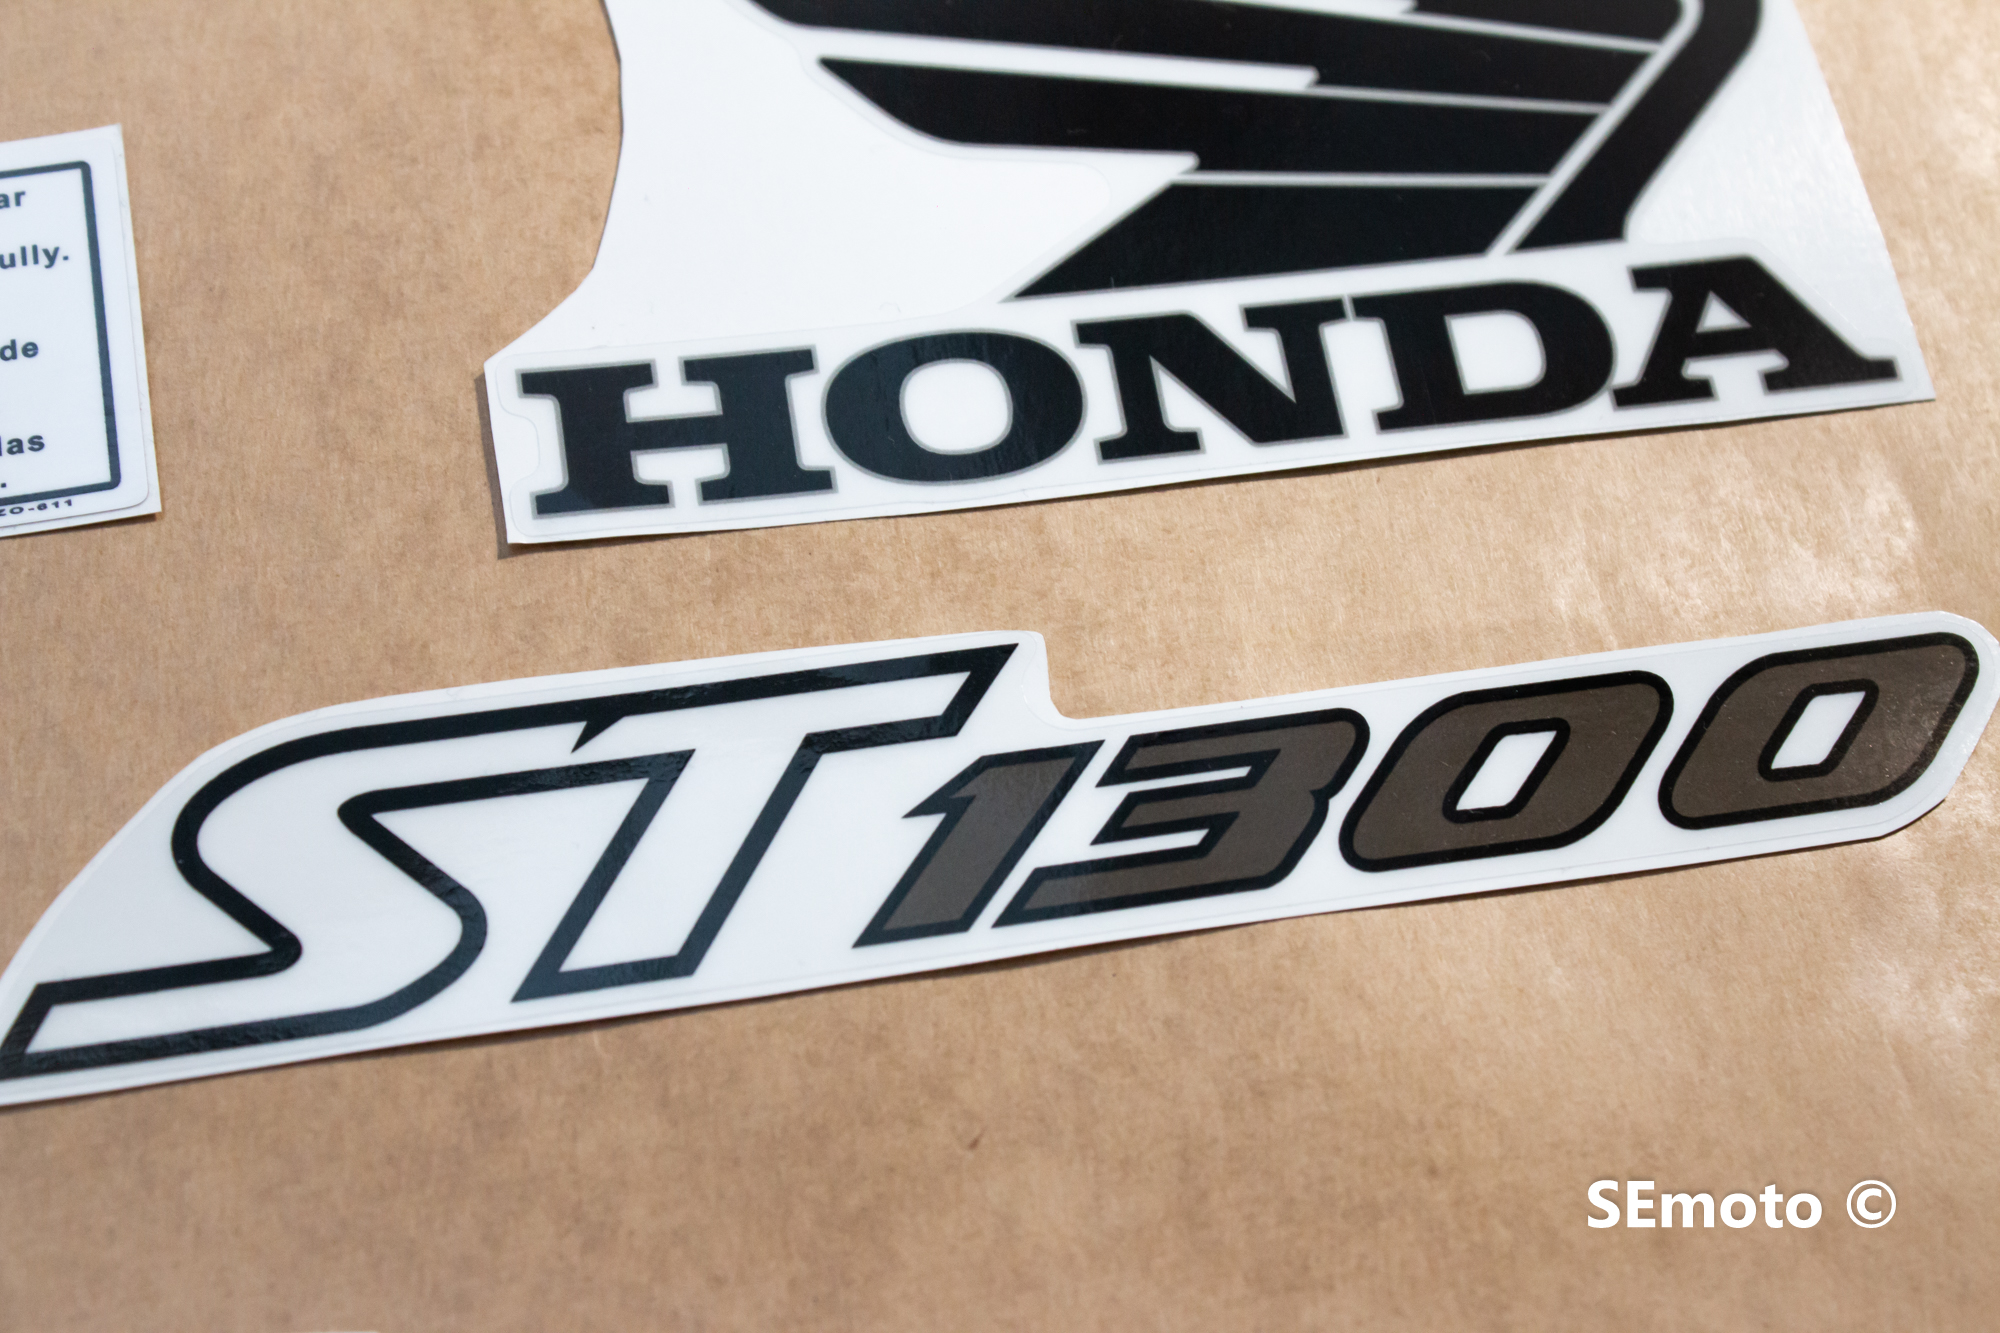 Honda ST 1300 Серебро- фото5